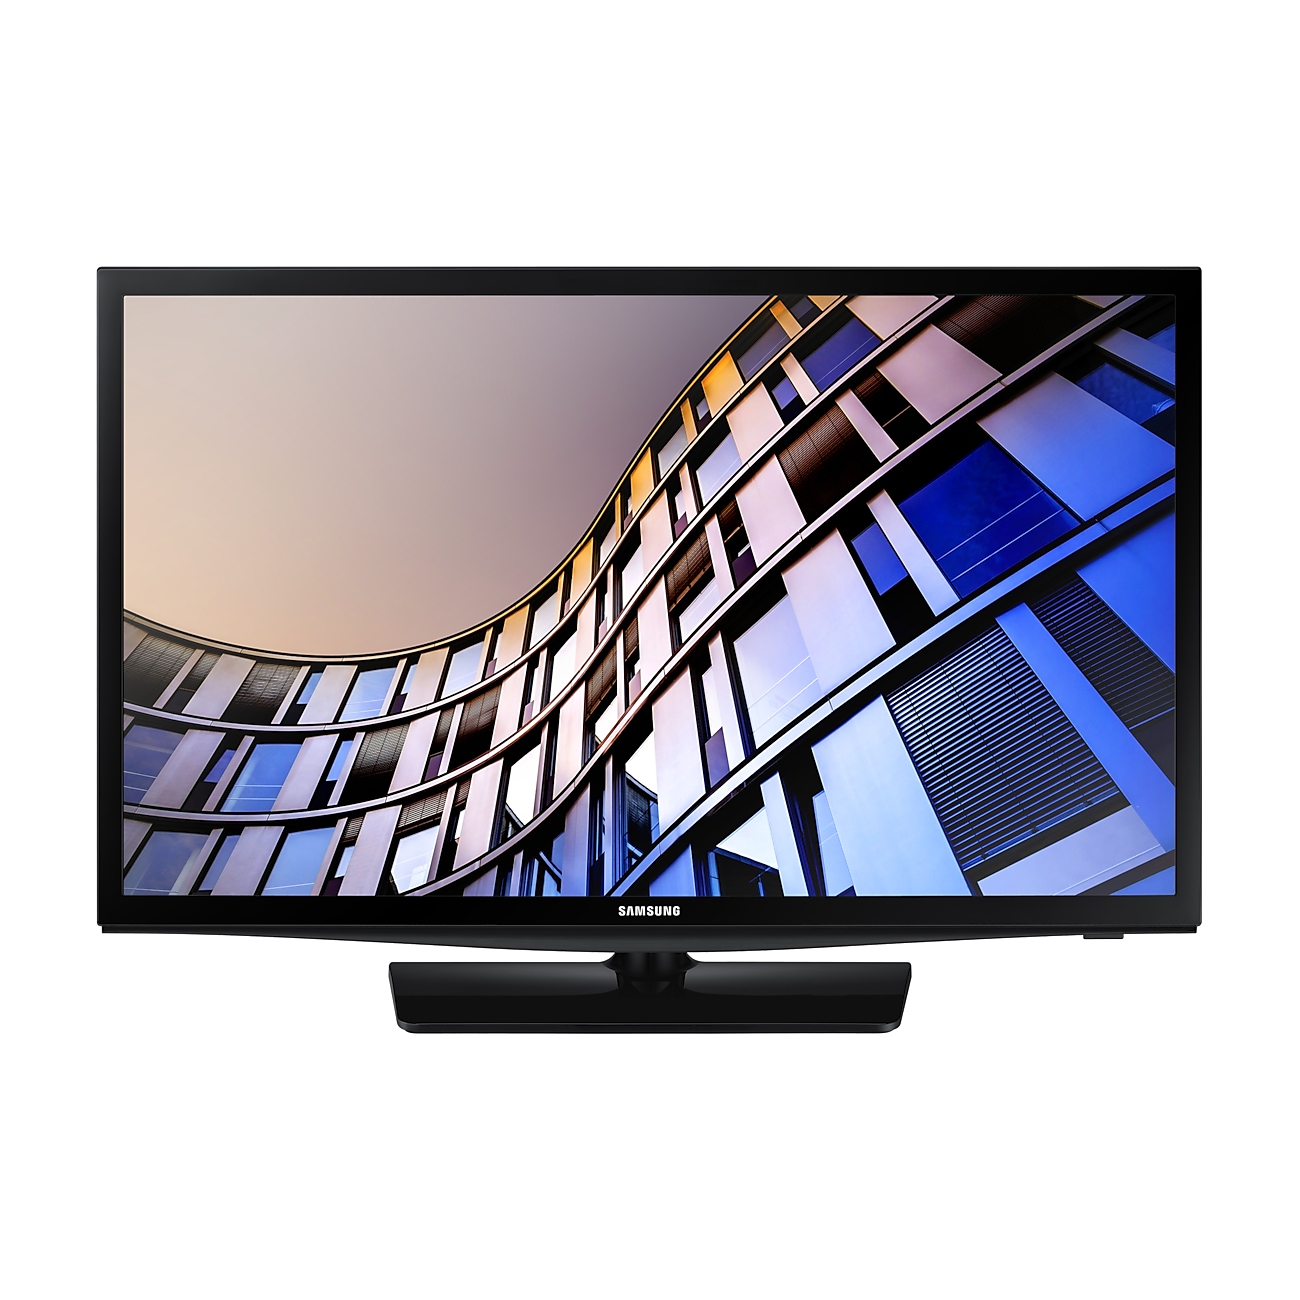 Samsung UE24N4300A LED 24" Smart 720p HD Ready TV